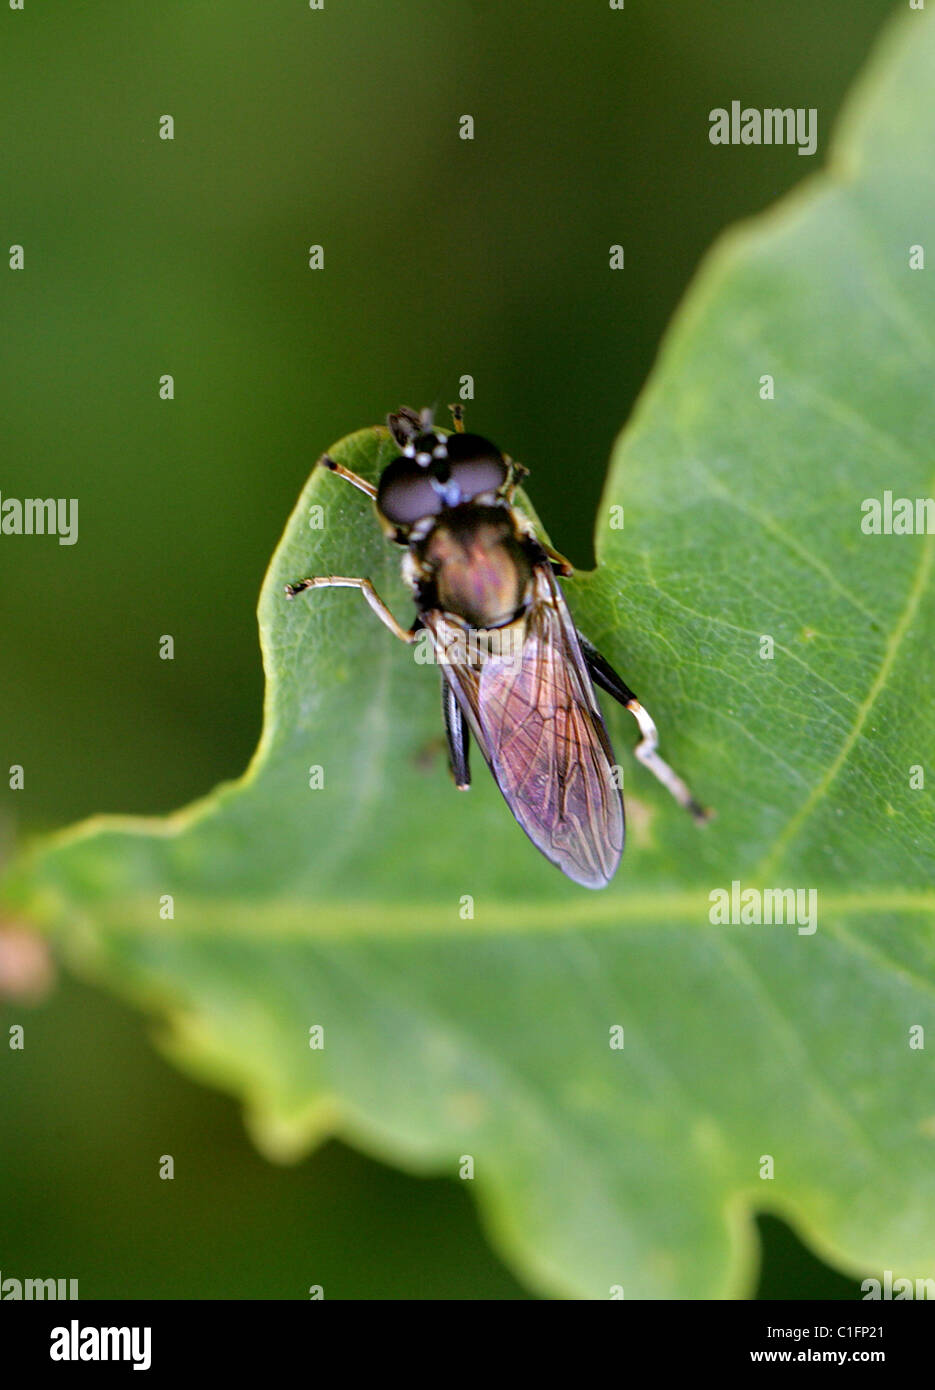 Hoverfly, Xylota segnis, Syrphidae, Diptera. Stock Photo